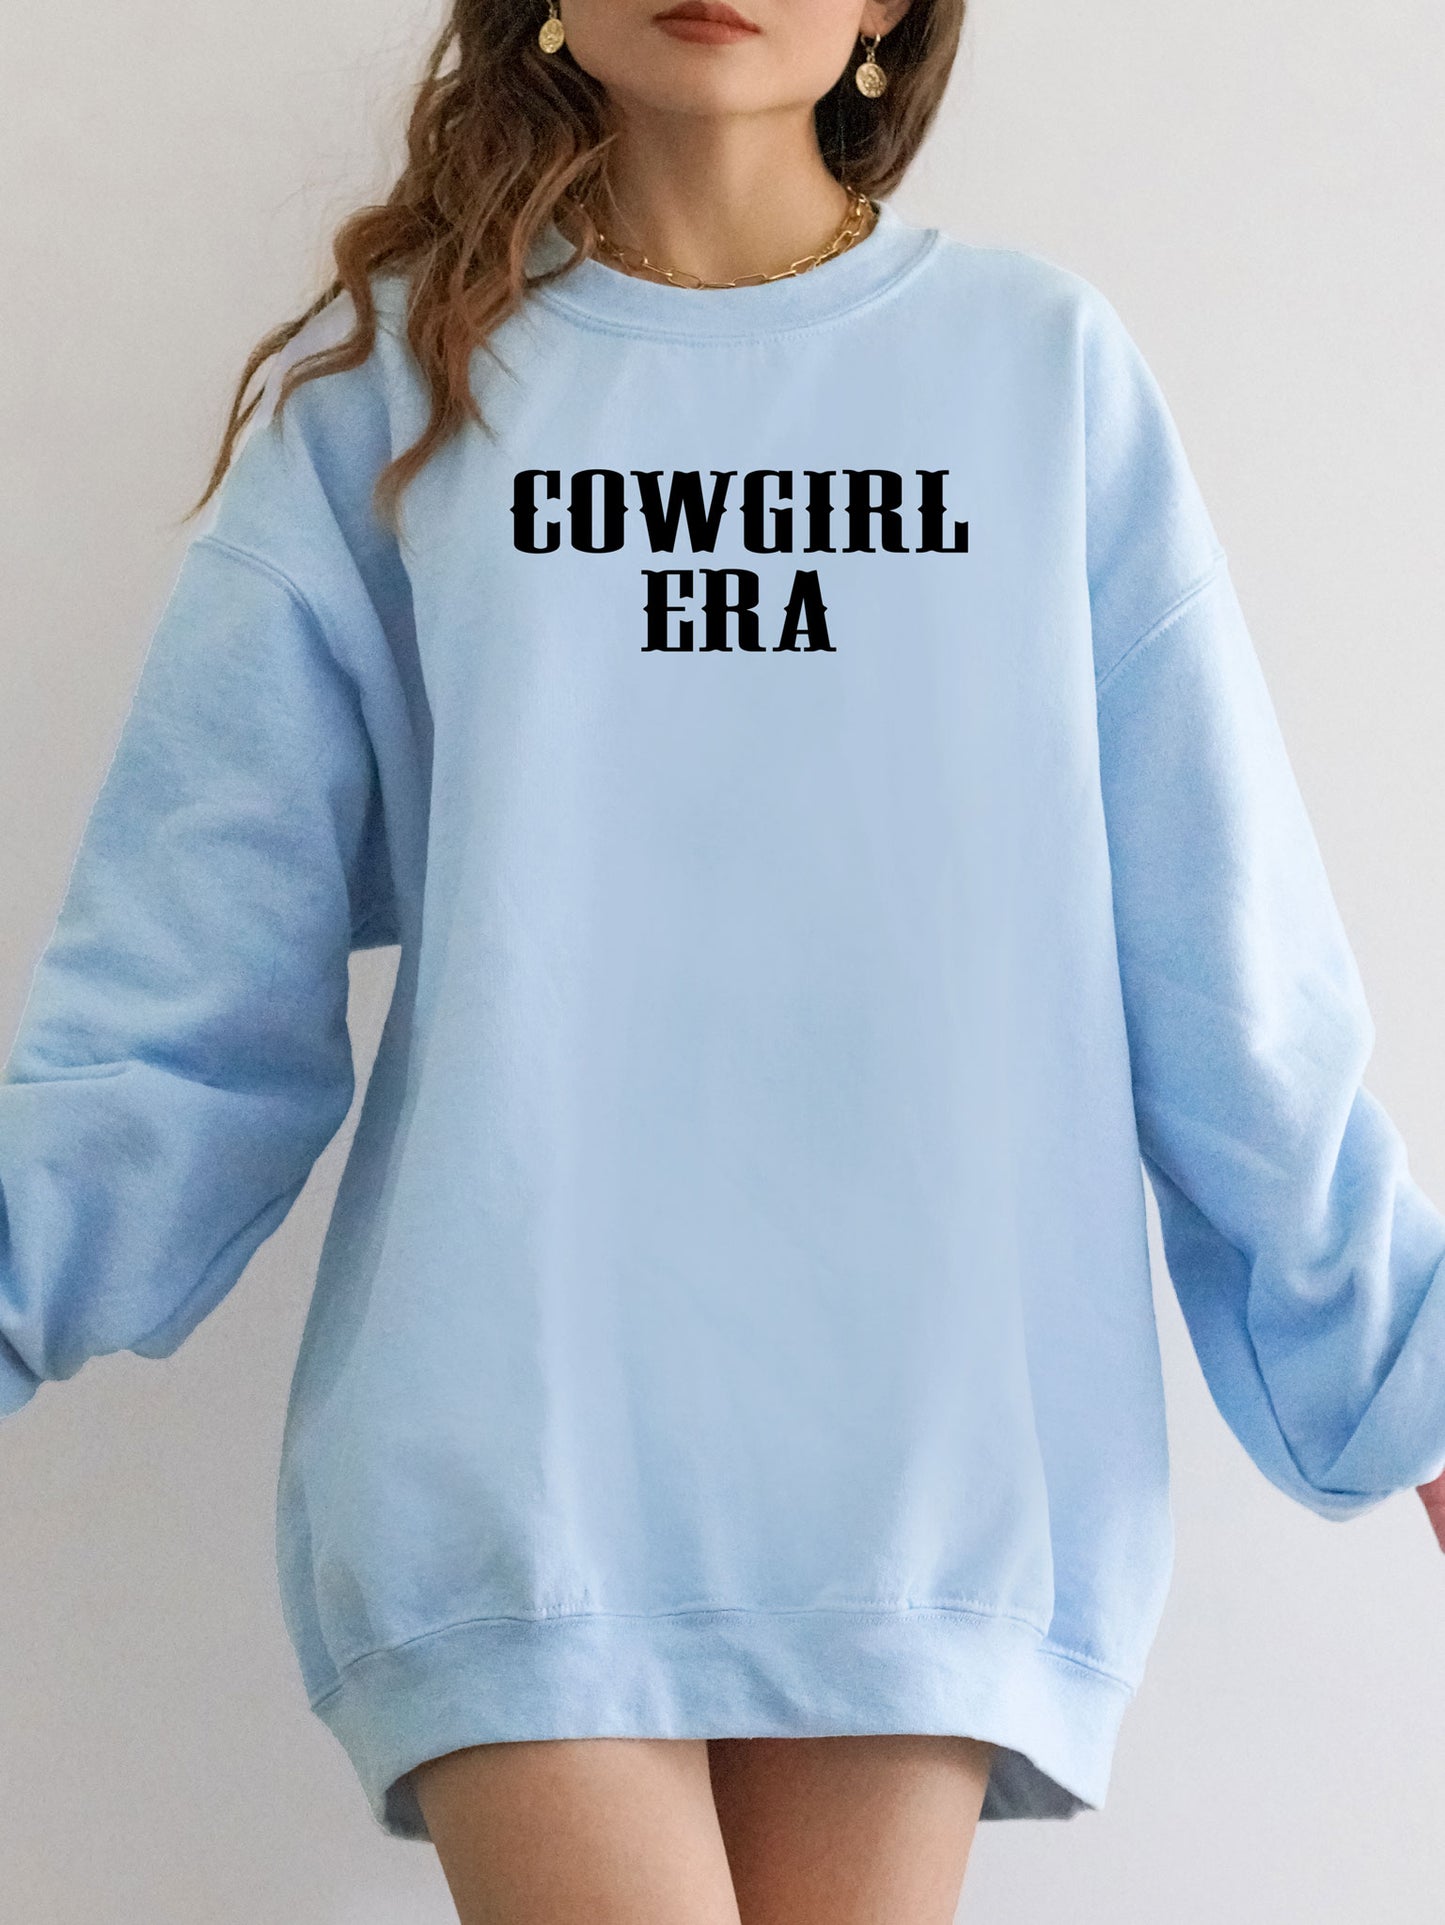 Cowgirl Era Sweatshirt - Black Ink